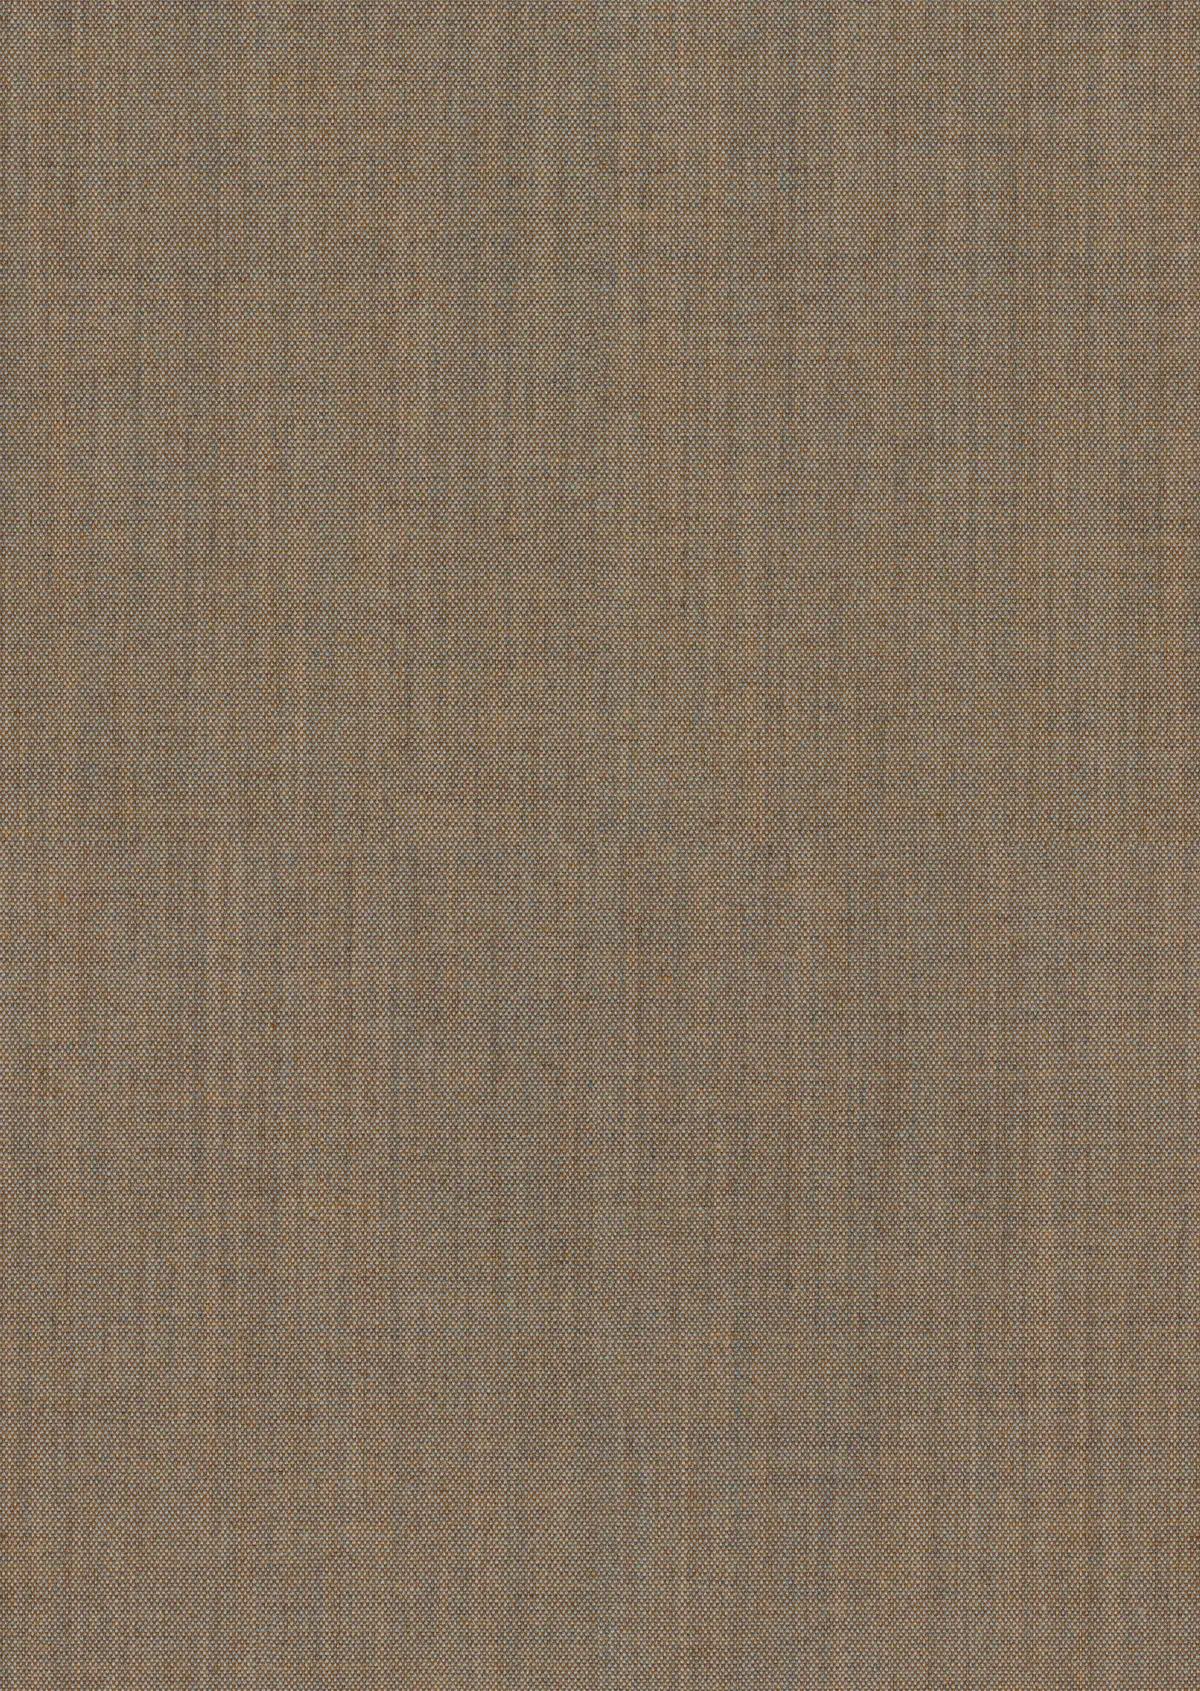 Fabric sample Remix 3 242 brown